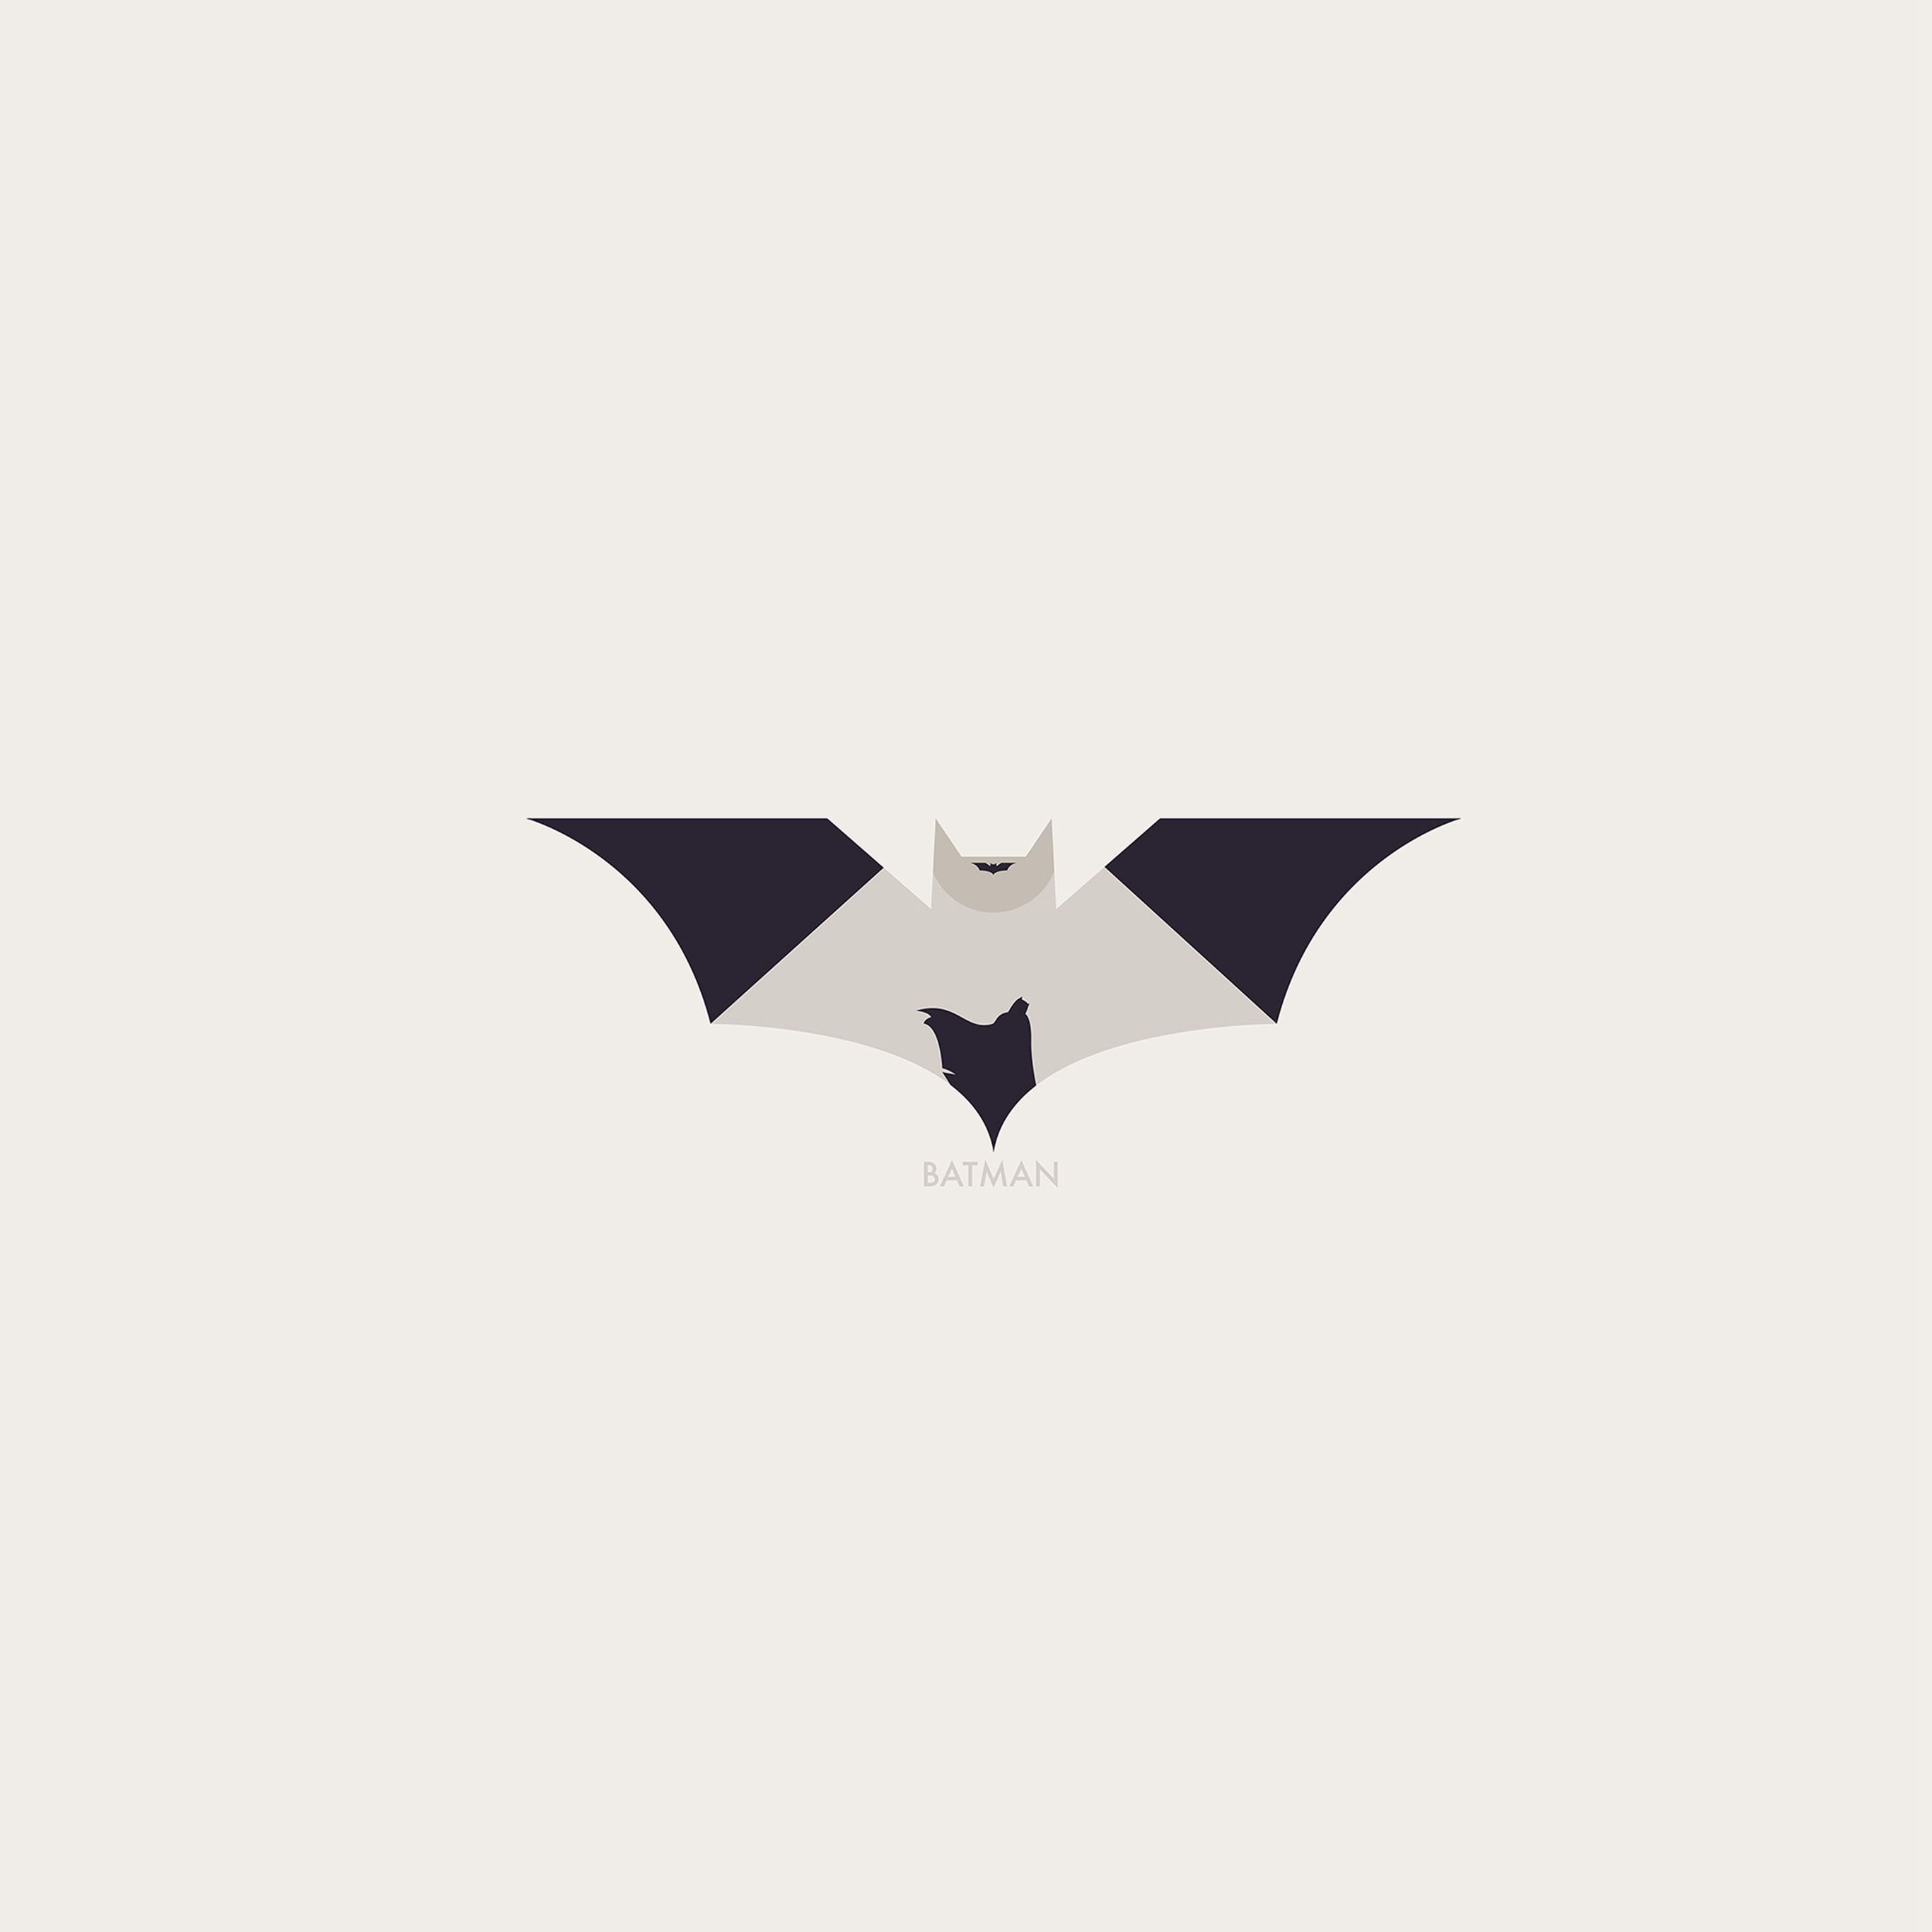 A bat logo with the word 'bat' written on it - IPad, Batman